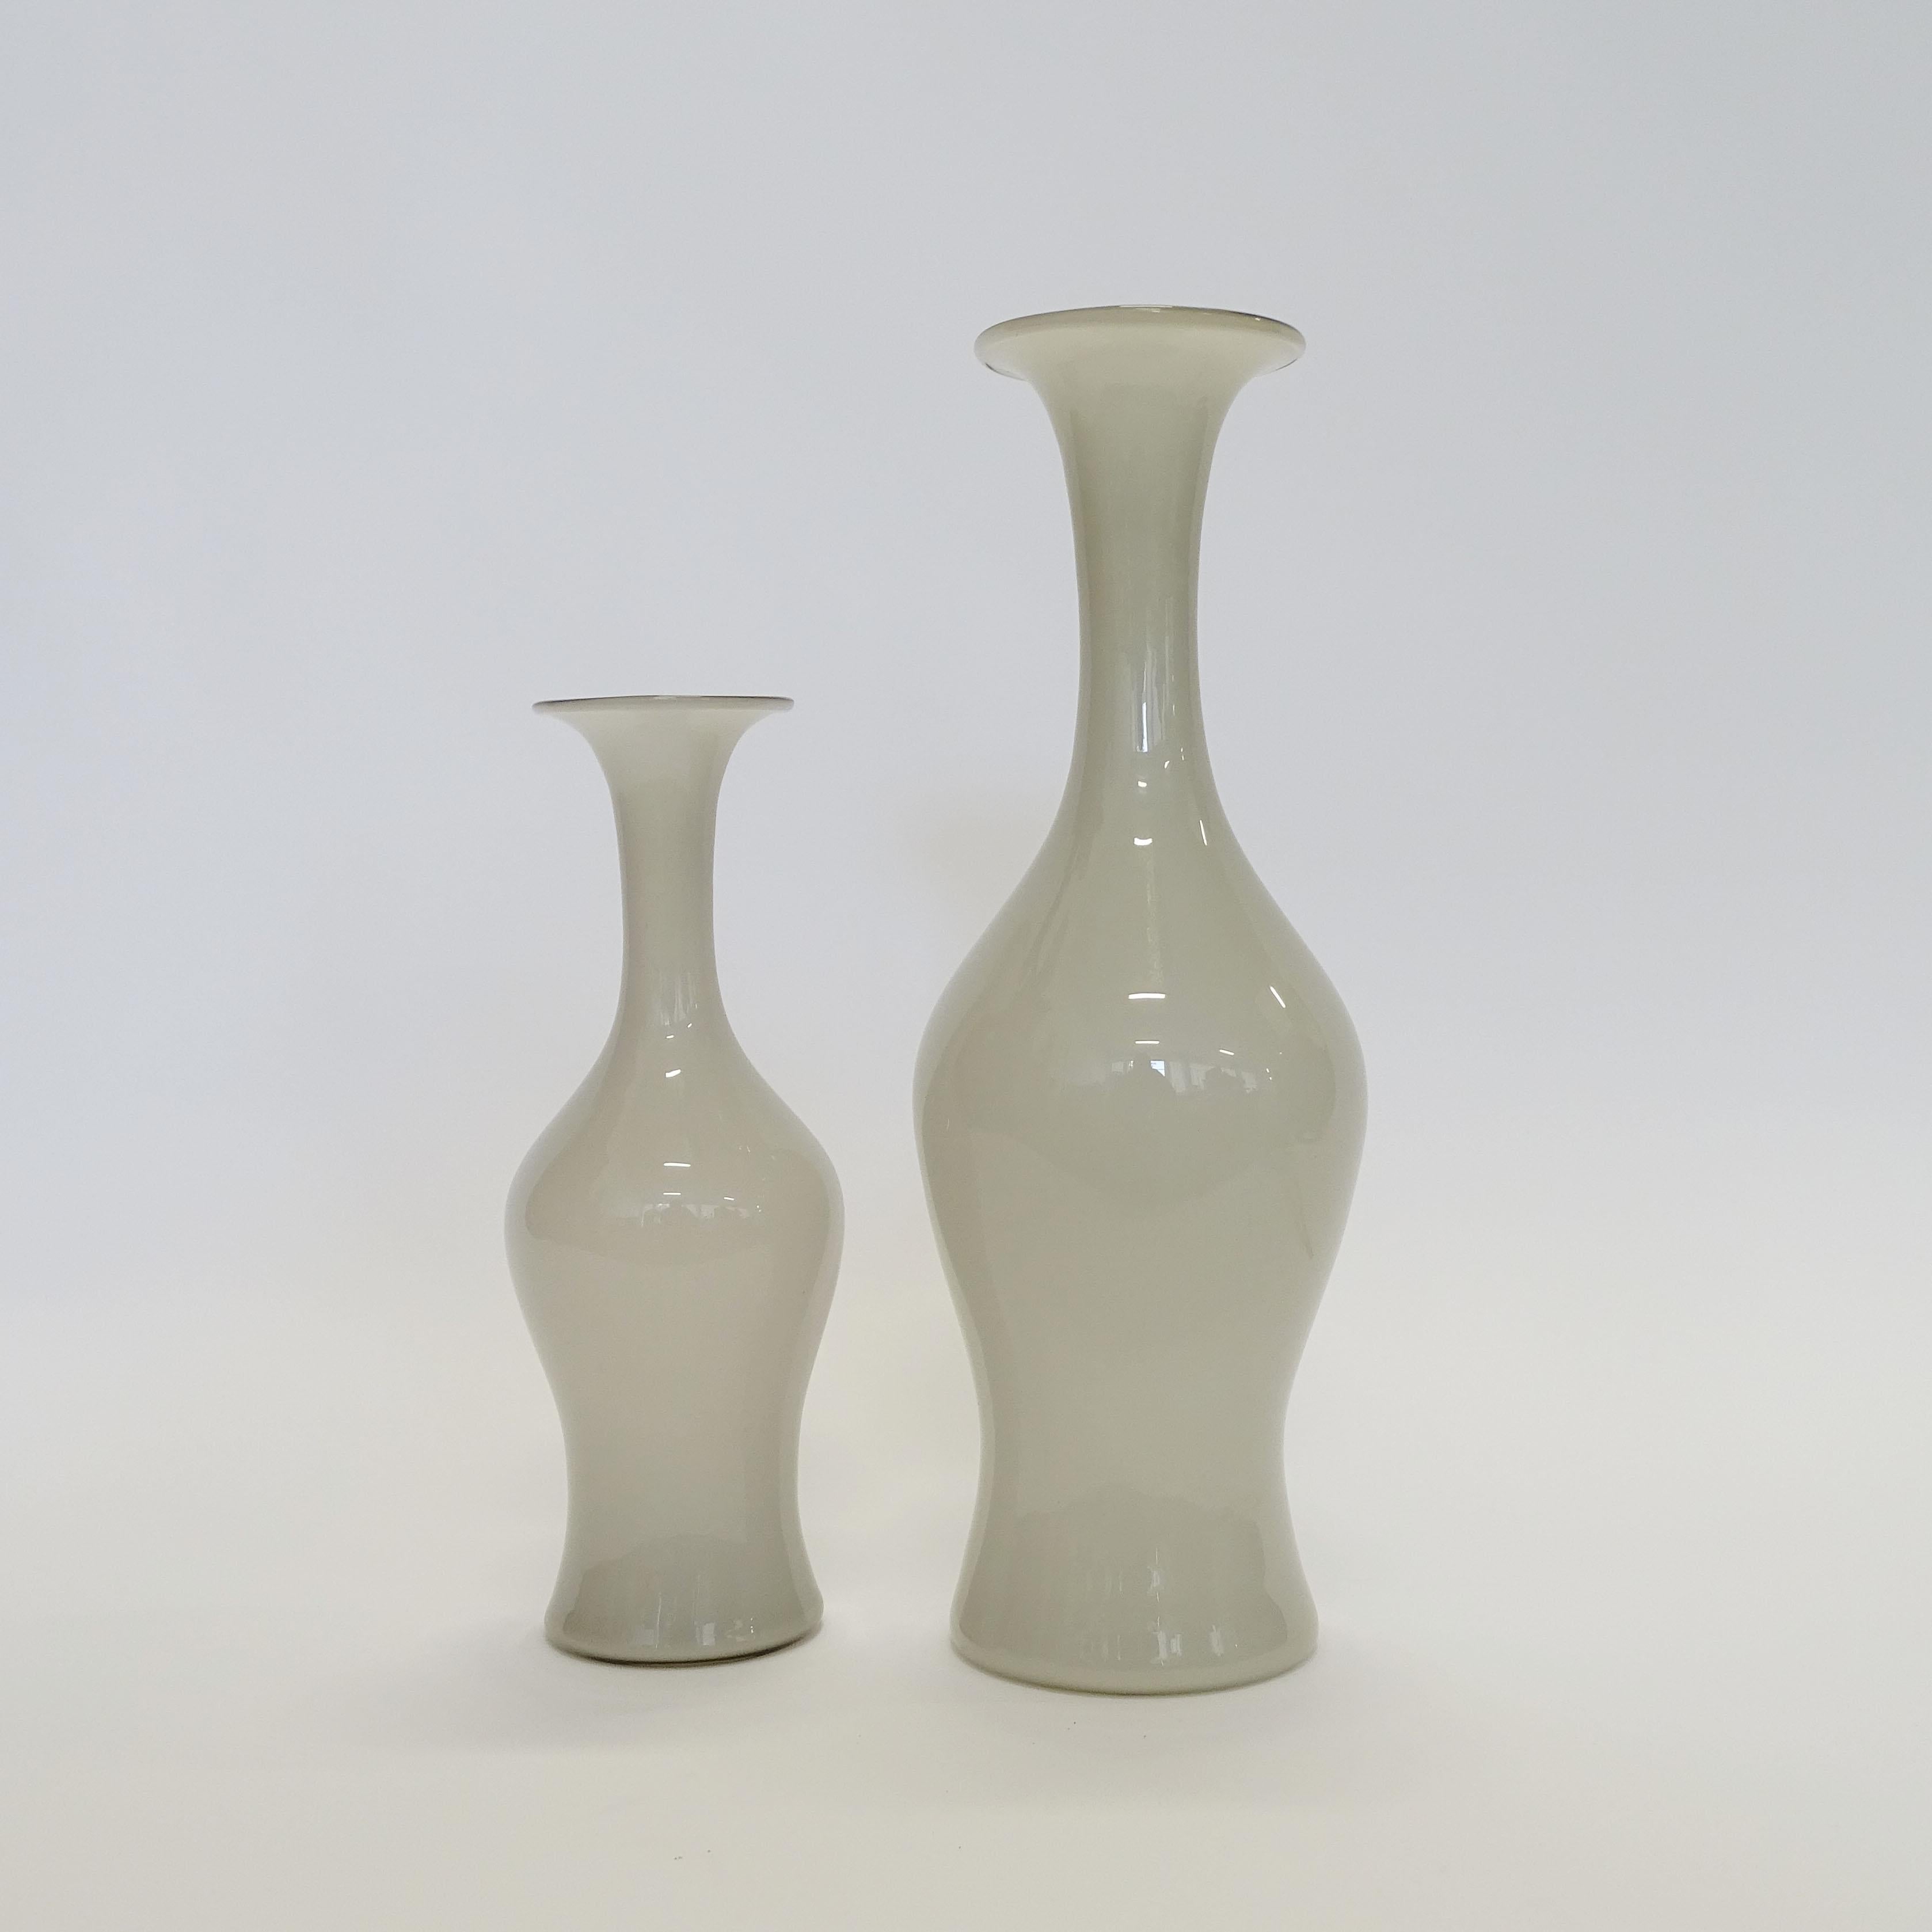 Monumental Paolo Venini vase model 3556 for Venini in light grey Opalino glass.
The second smaller vase measures Diameter 13 x H 38 cm.
Both vases carry the Venini label and are Acid etched Venini Murano Italia.
 